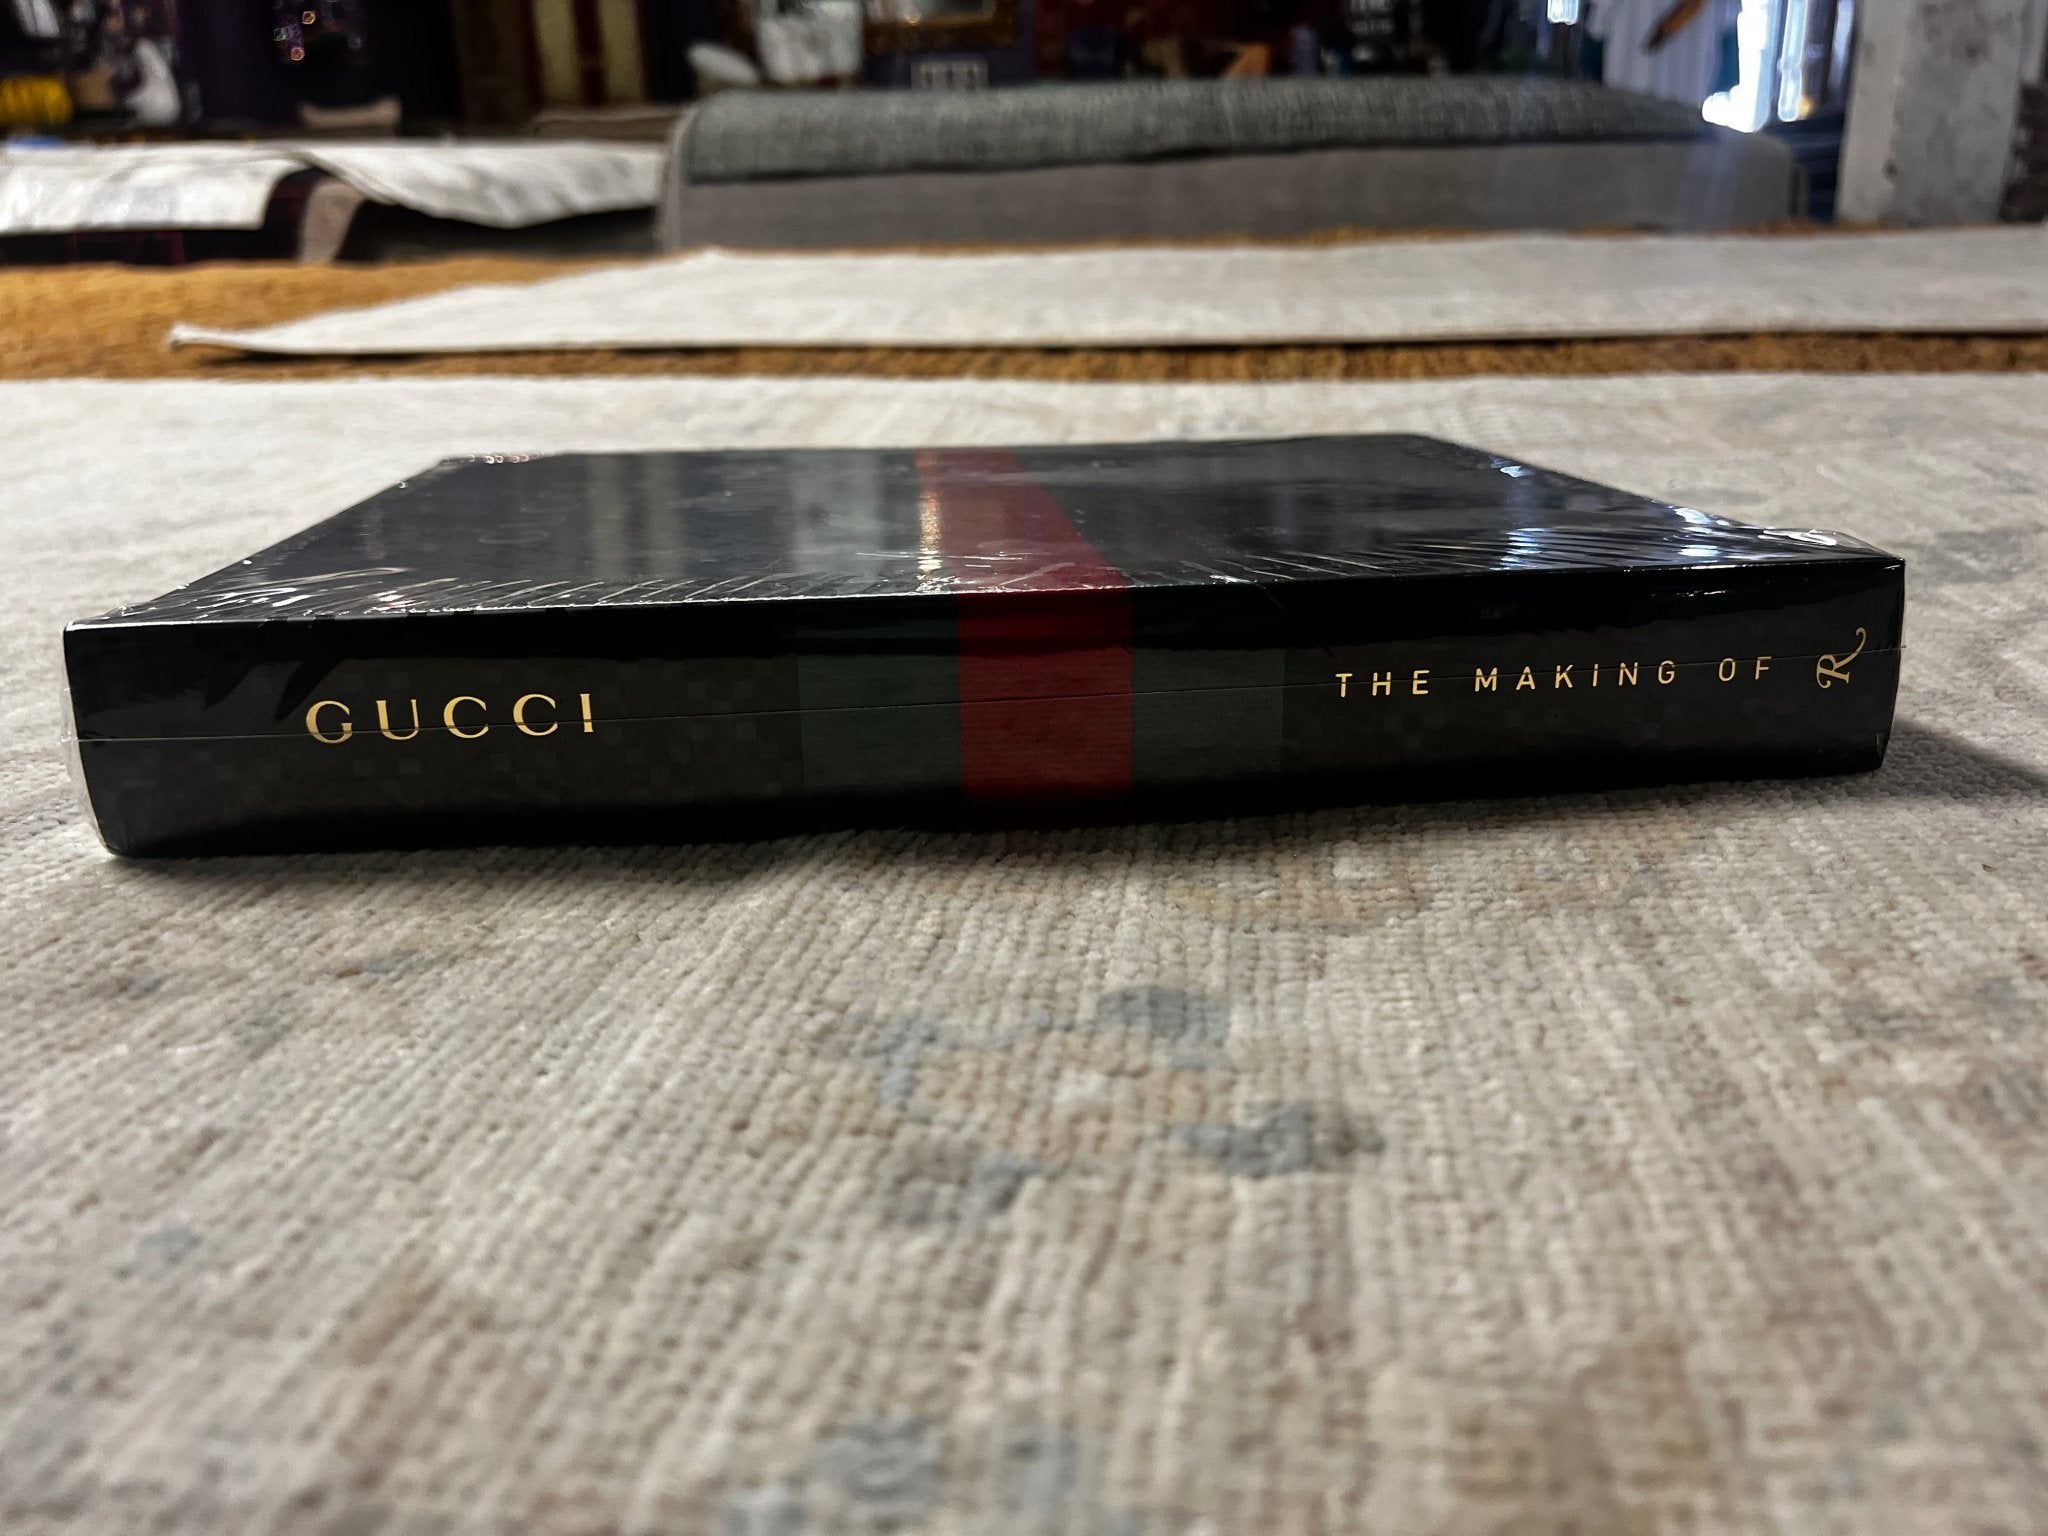 Gucci Iconic Fashion Design Brand Coffee Table Book | Banana Manor Rug Company